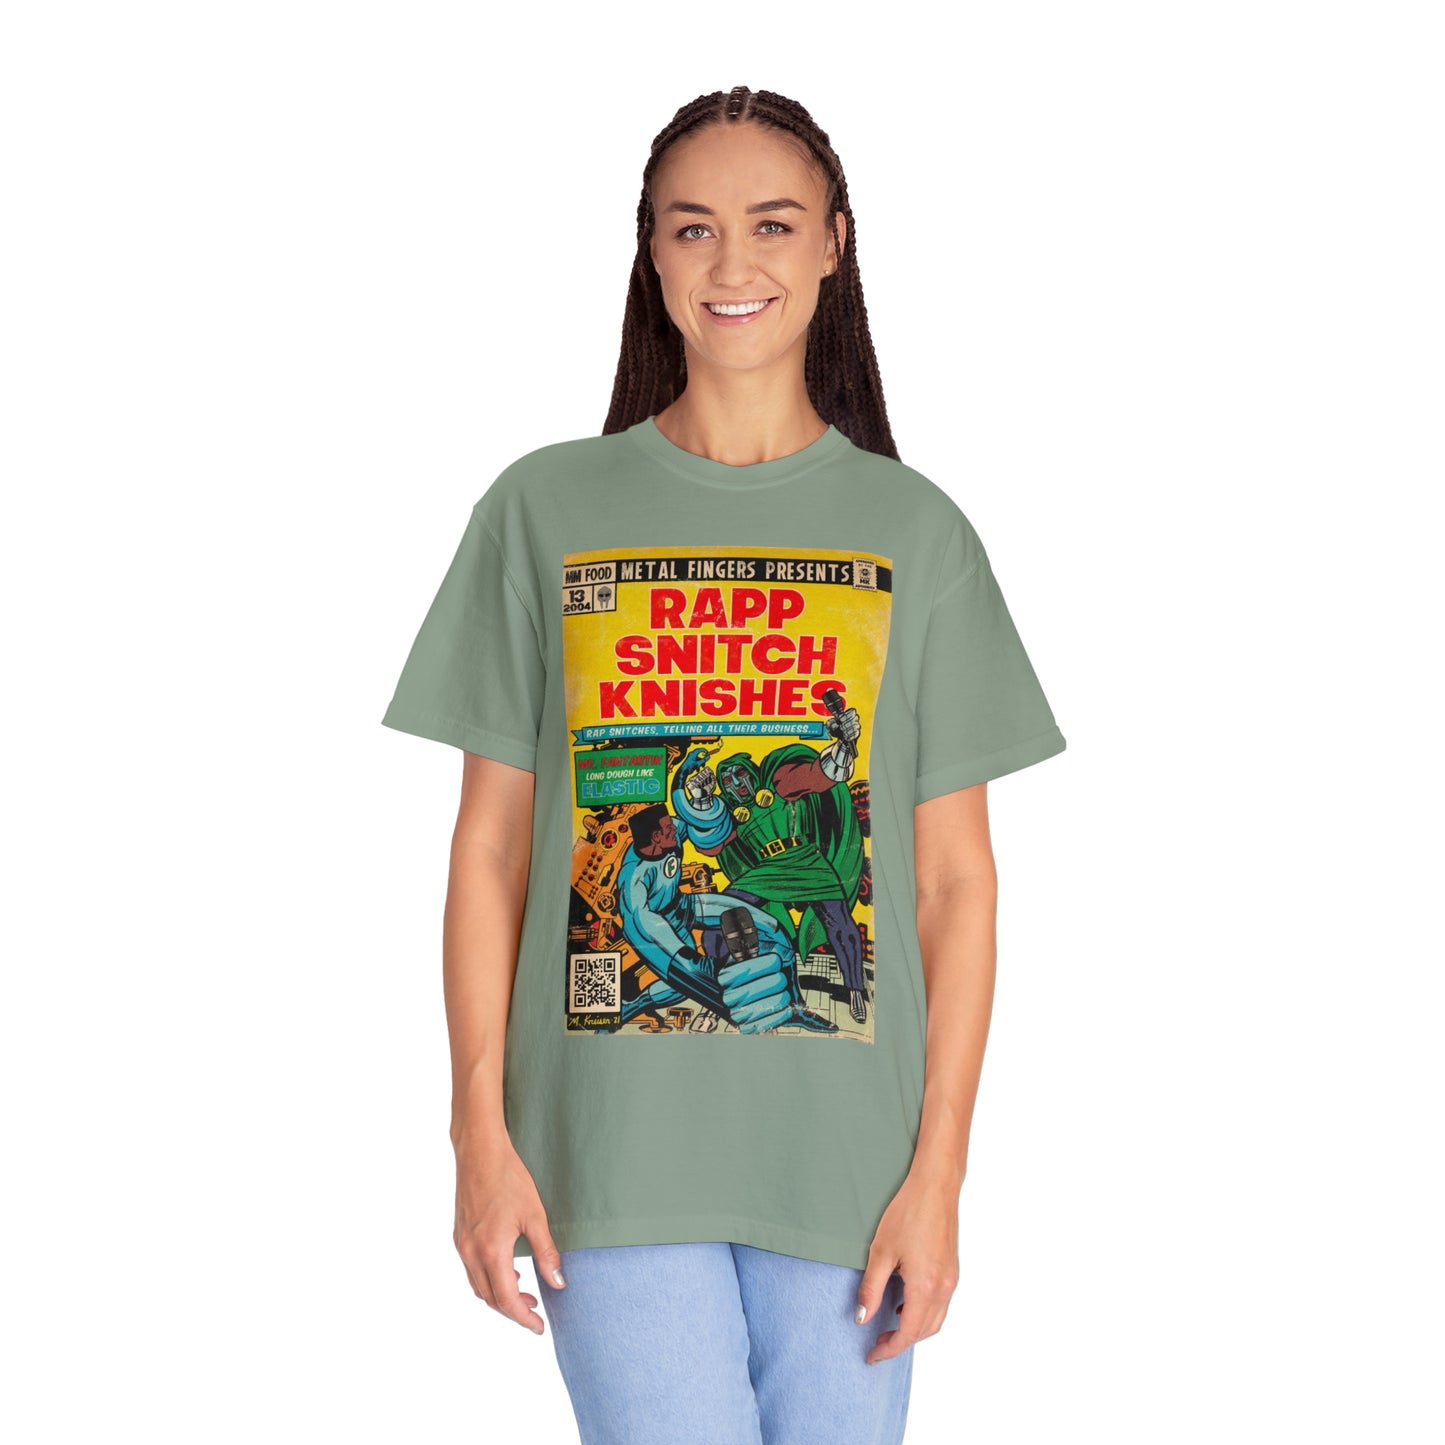 MF DOOM - Rapp Snitch Knishes - Unisex Comfort Colors T-shirt